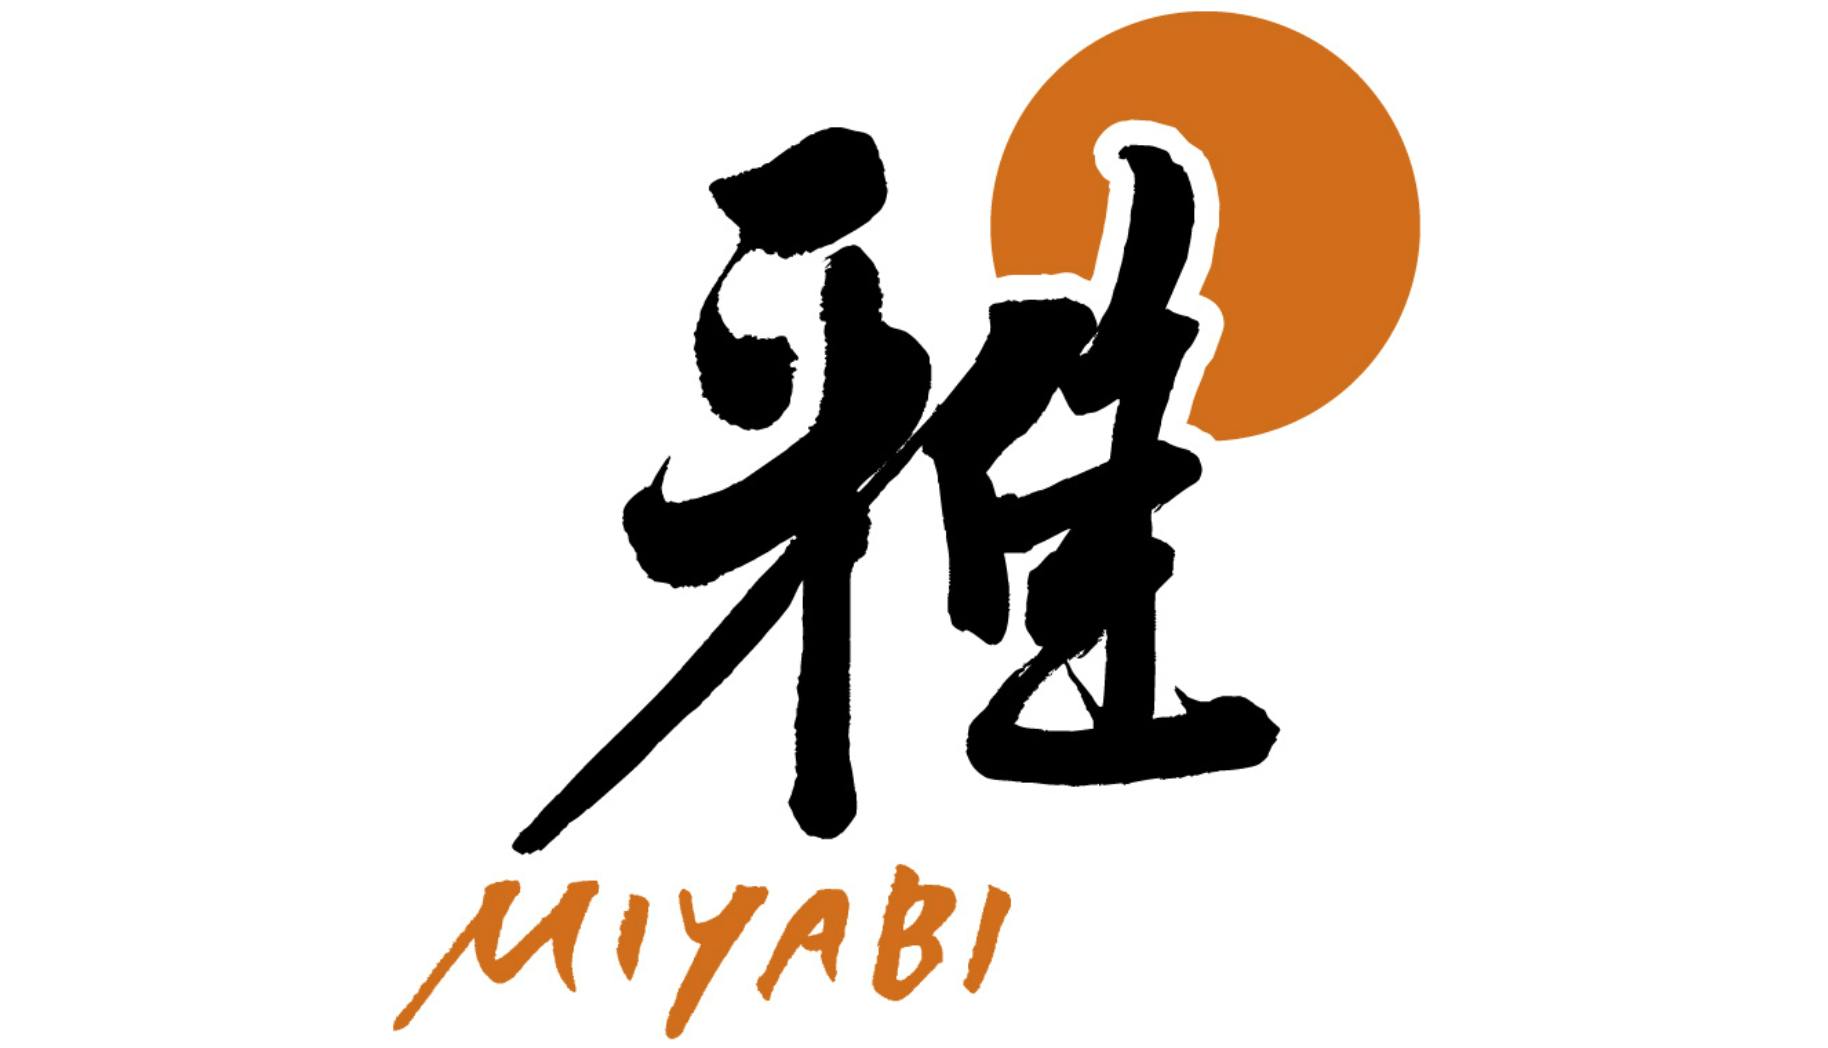 The Miyabi knives logo. 